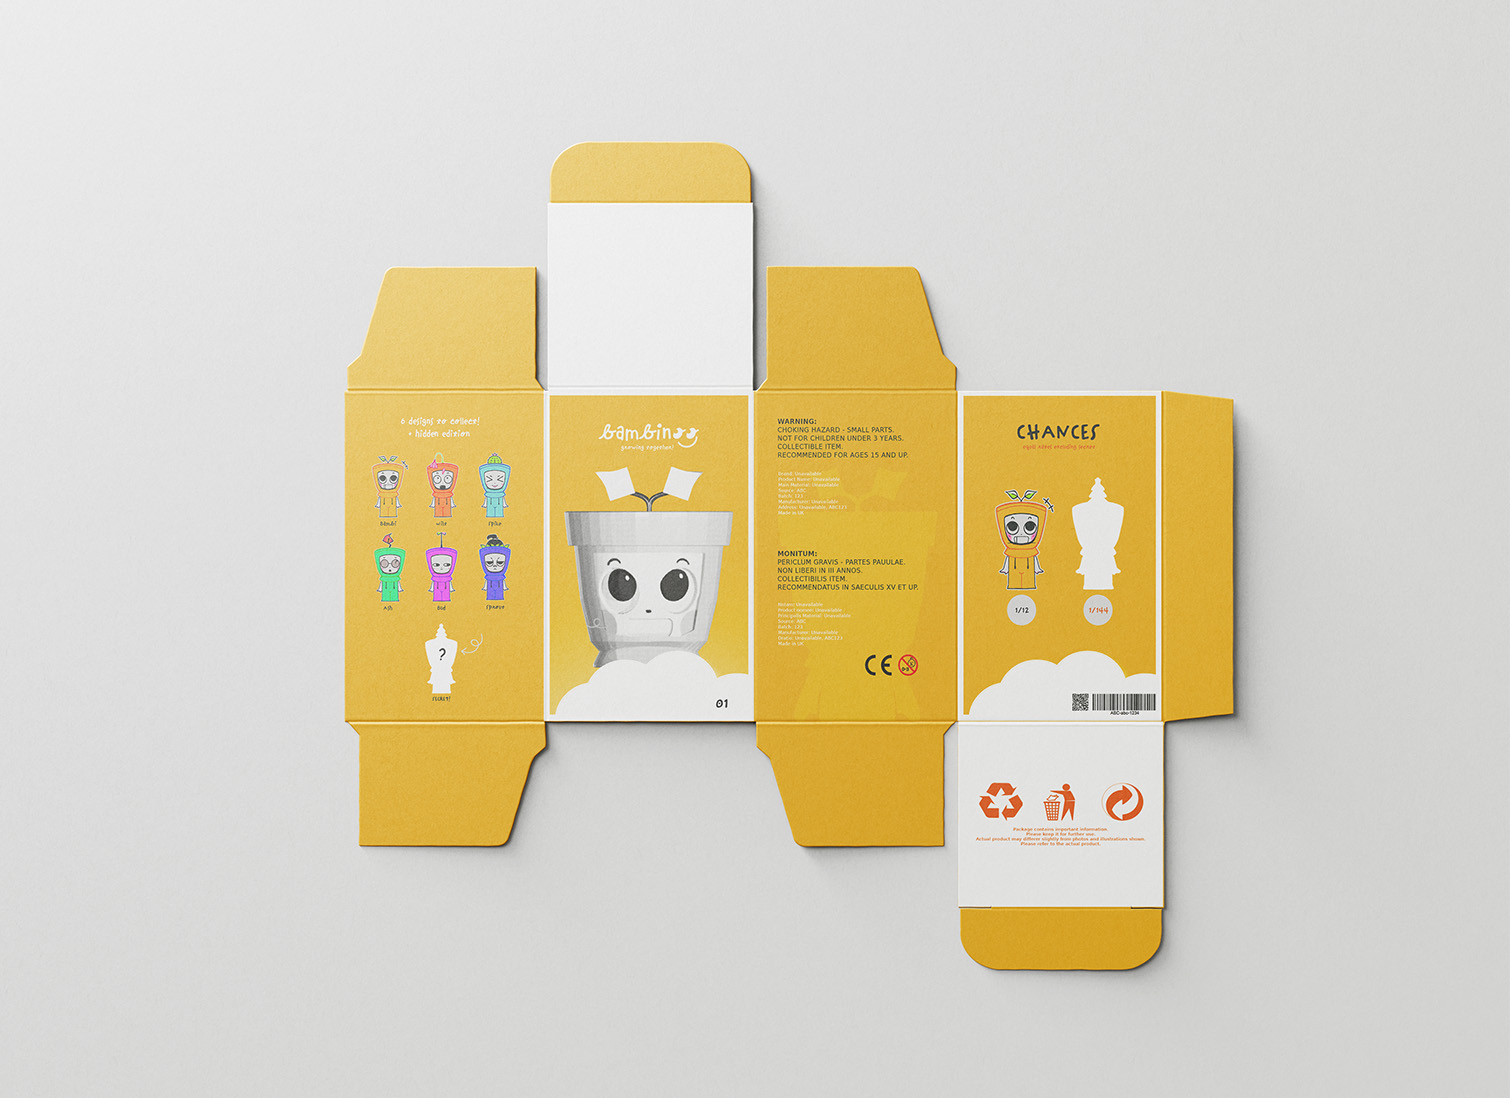 Design for yellow box